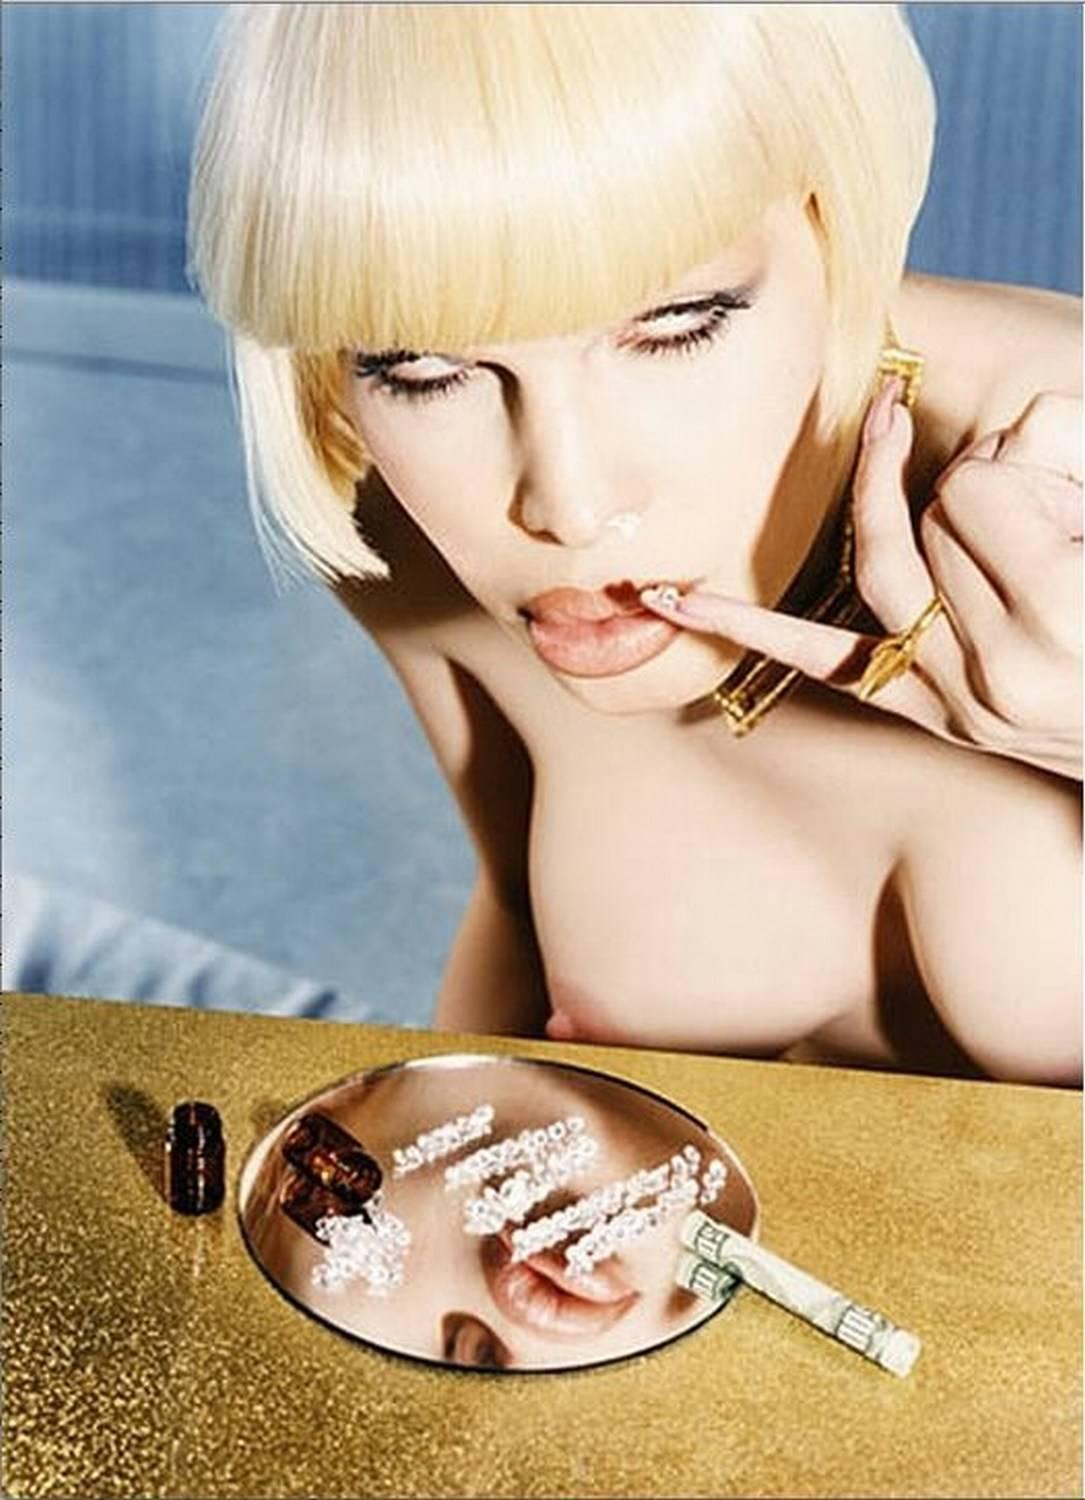 David LaChapelle Portrait Photograph - Addicted to Diamonds